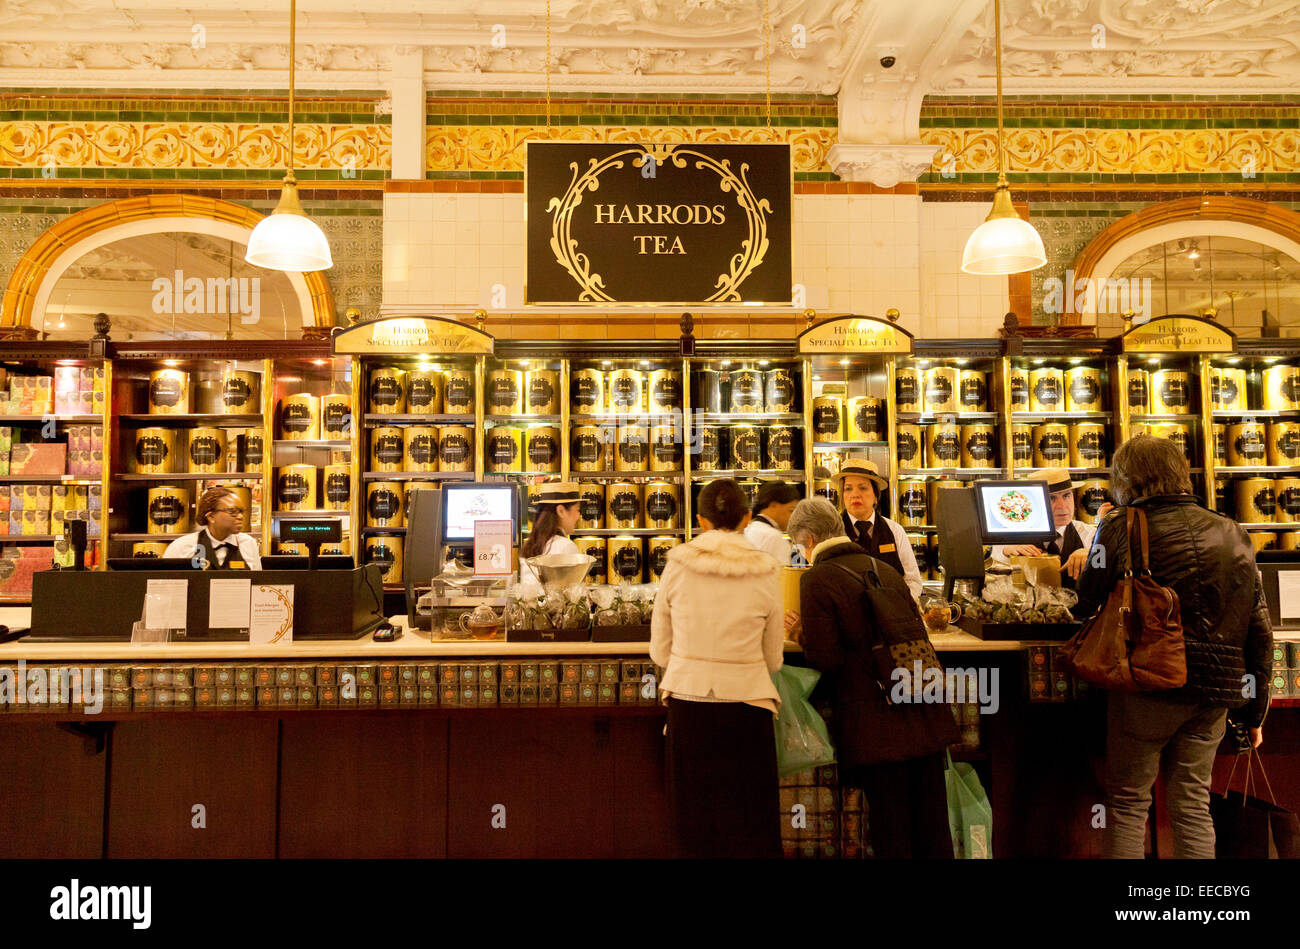 Customers at the Tea counter, the interior of Harrods Department store, Knightsbridge, London UK Stock Photo